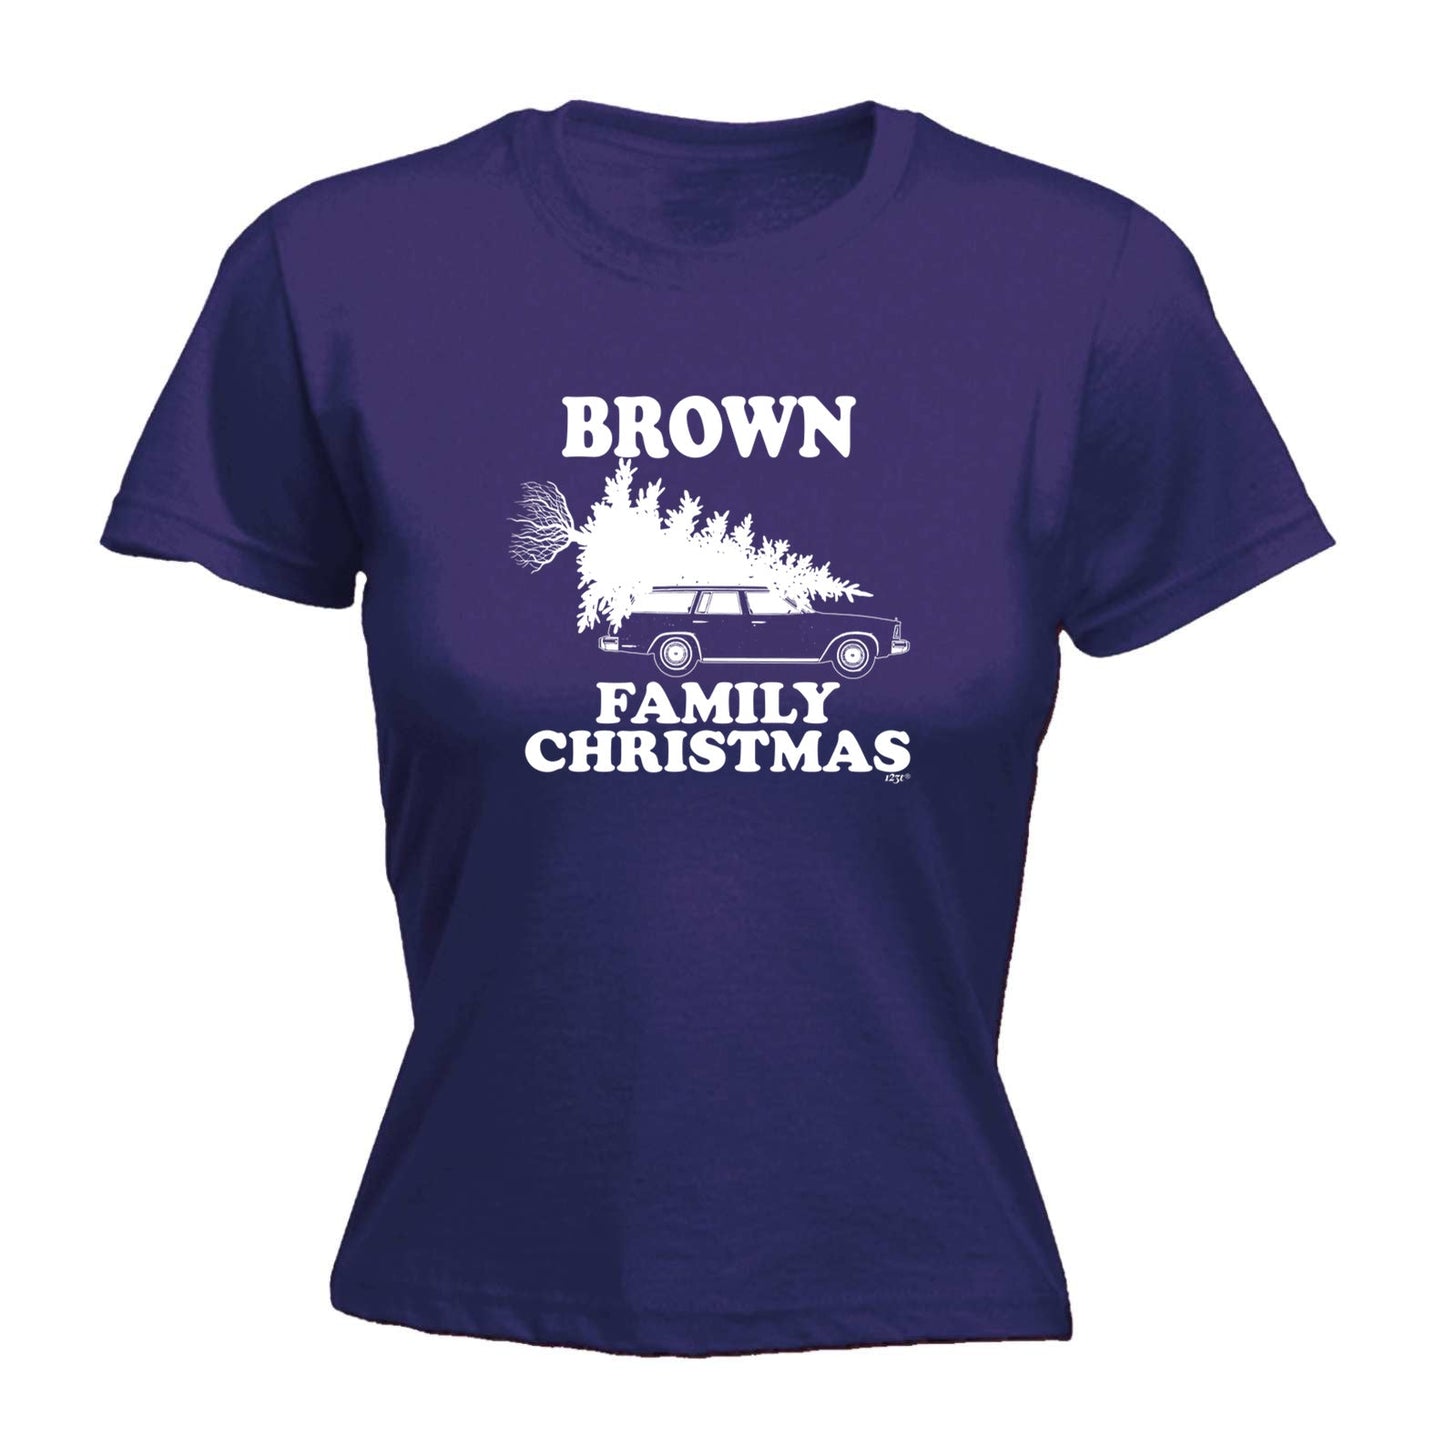 Family Christmas Brown - Xmas Novelty Womens T-Shirt Tshirt